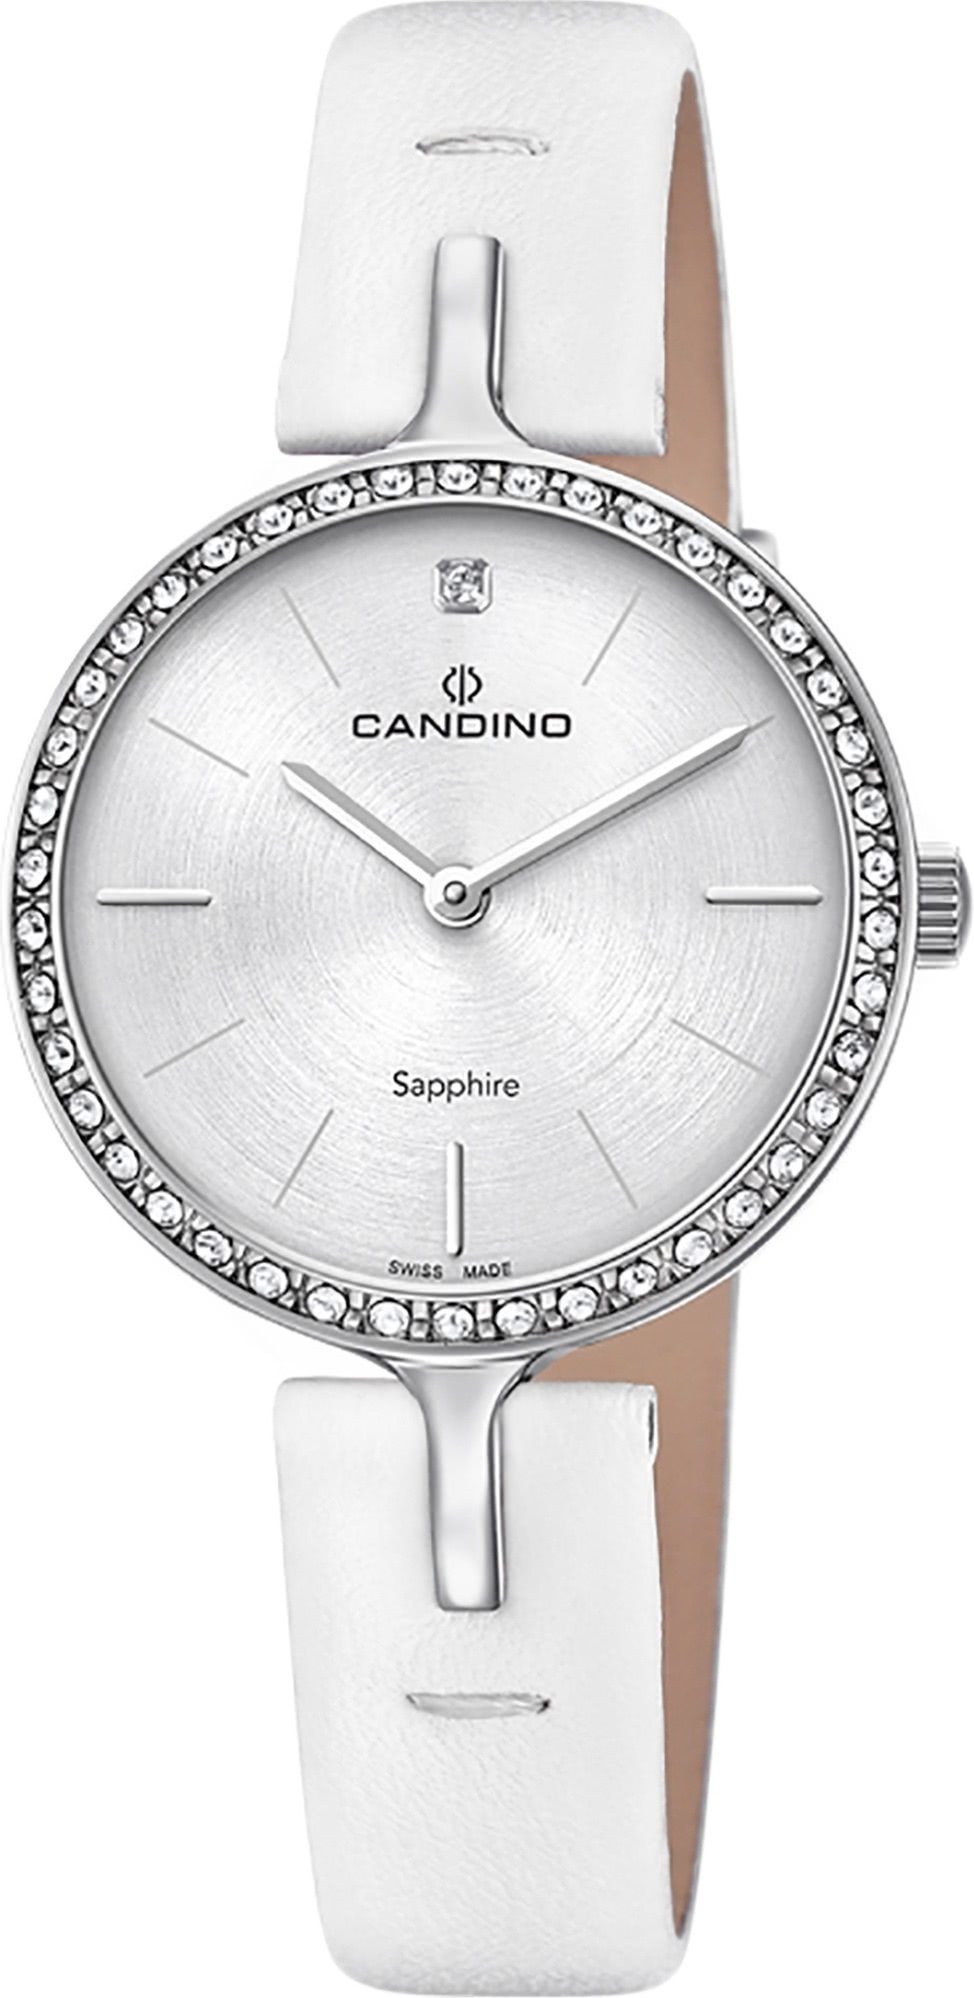 rund, Quarzuhr Lederarmband weiß, Damen Quarzuhr Damen Candino Armbanduhr C4651/1, Candino Fashion Analog